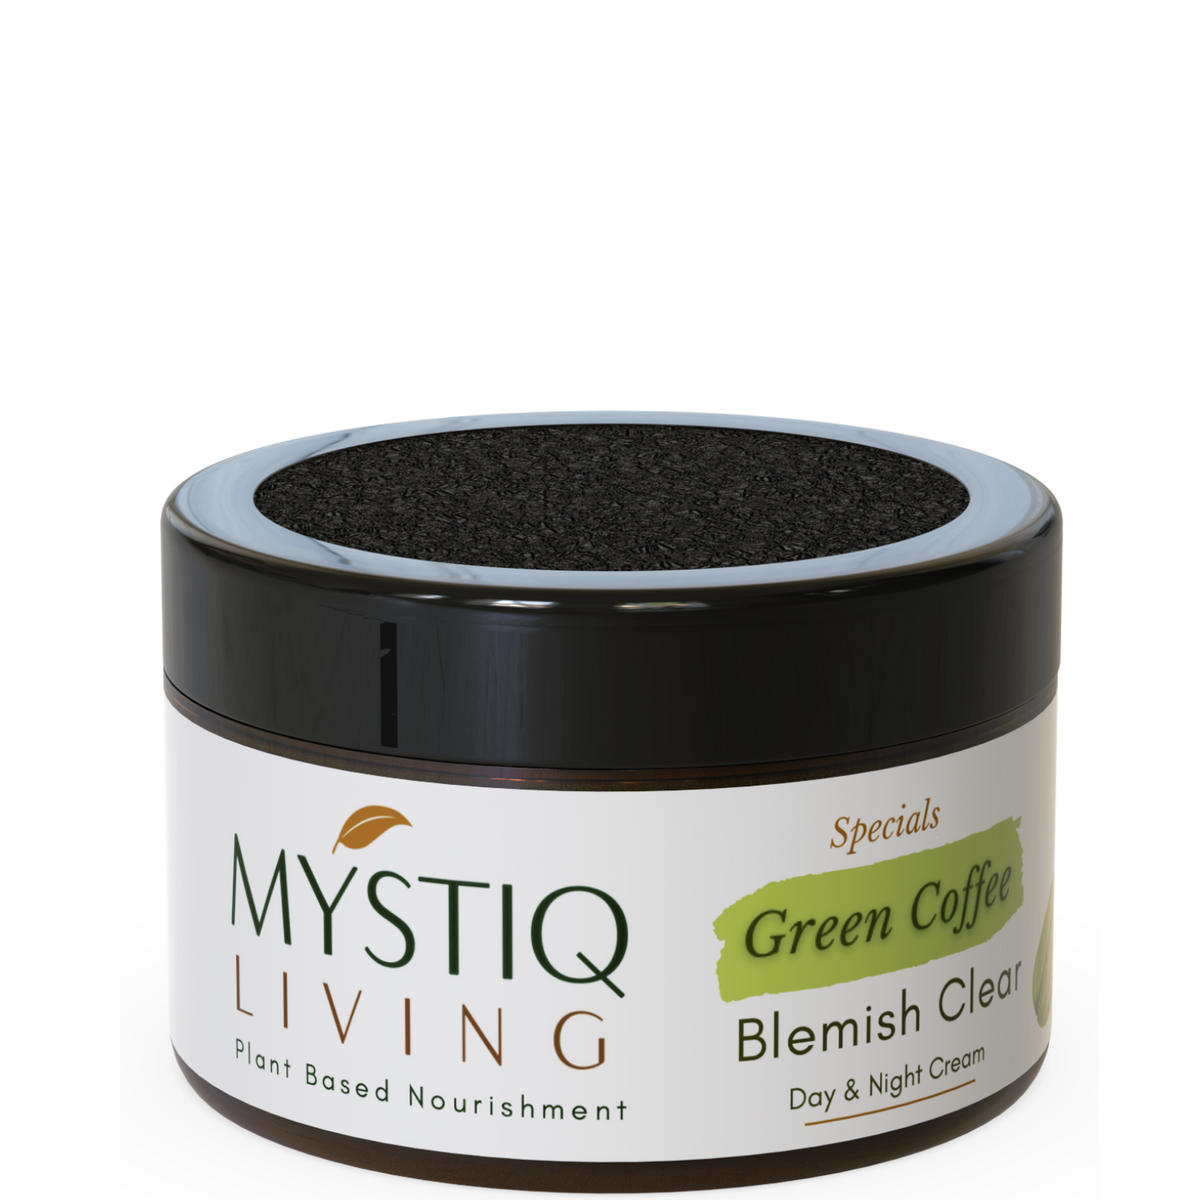 Green Coffee Blemish Clear Cream - Mystiq Living